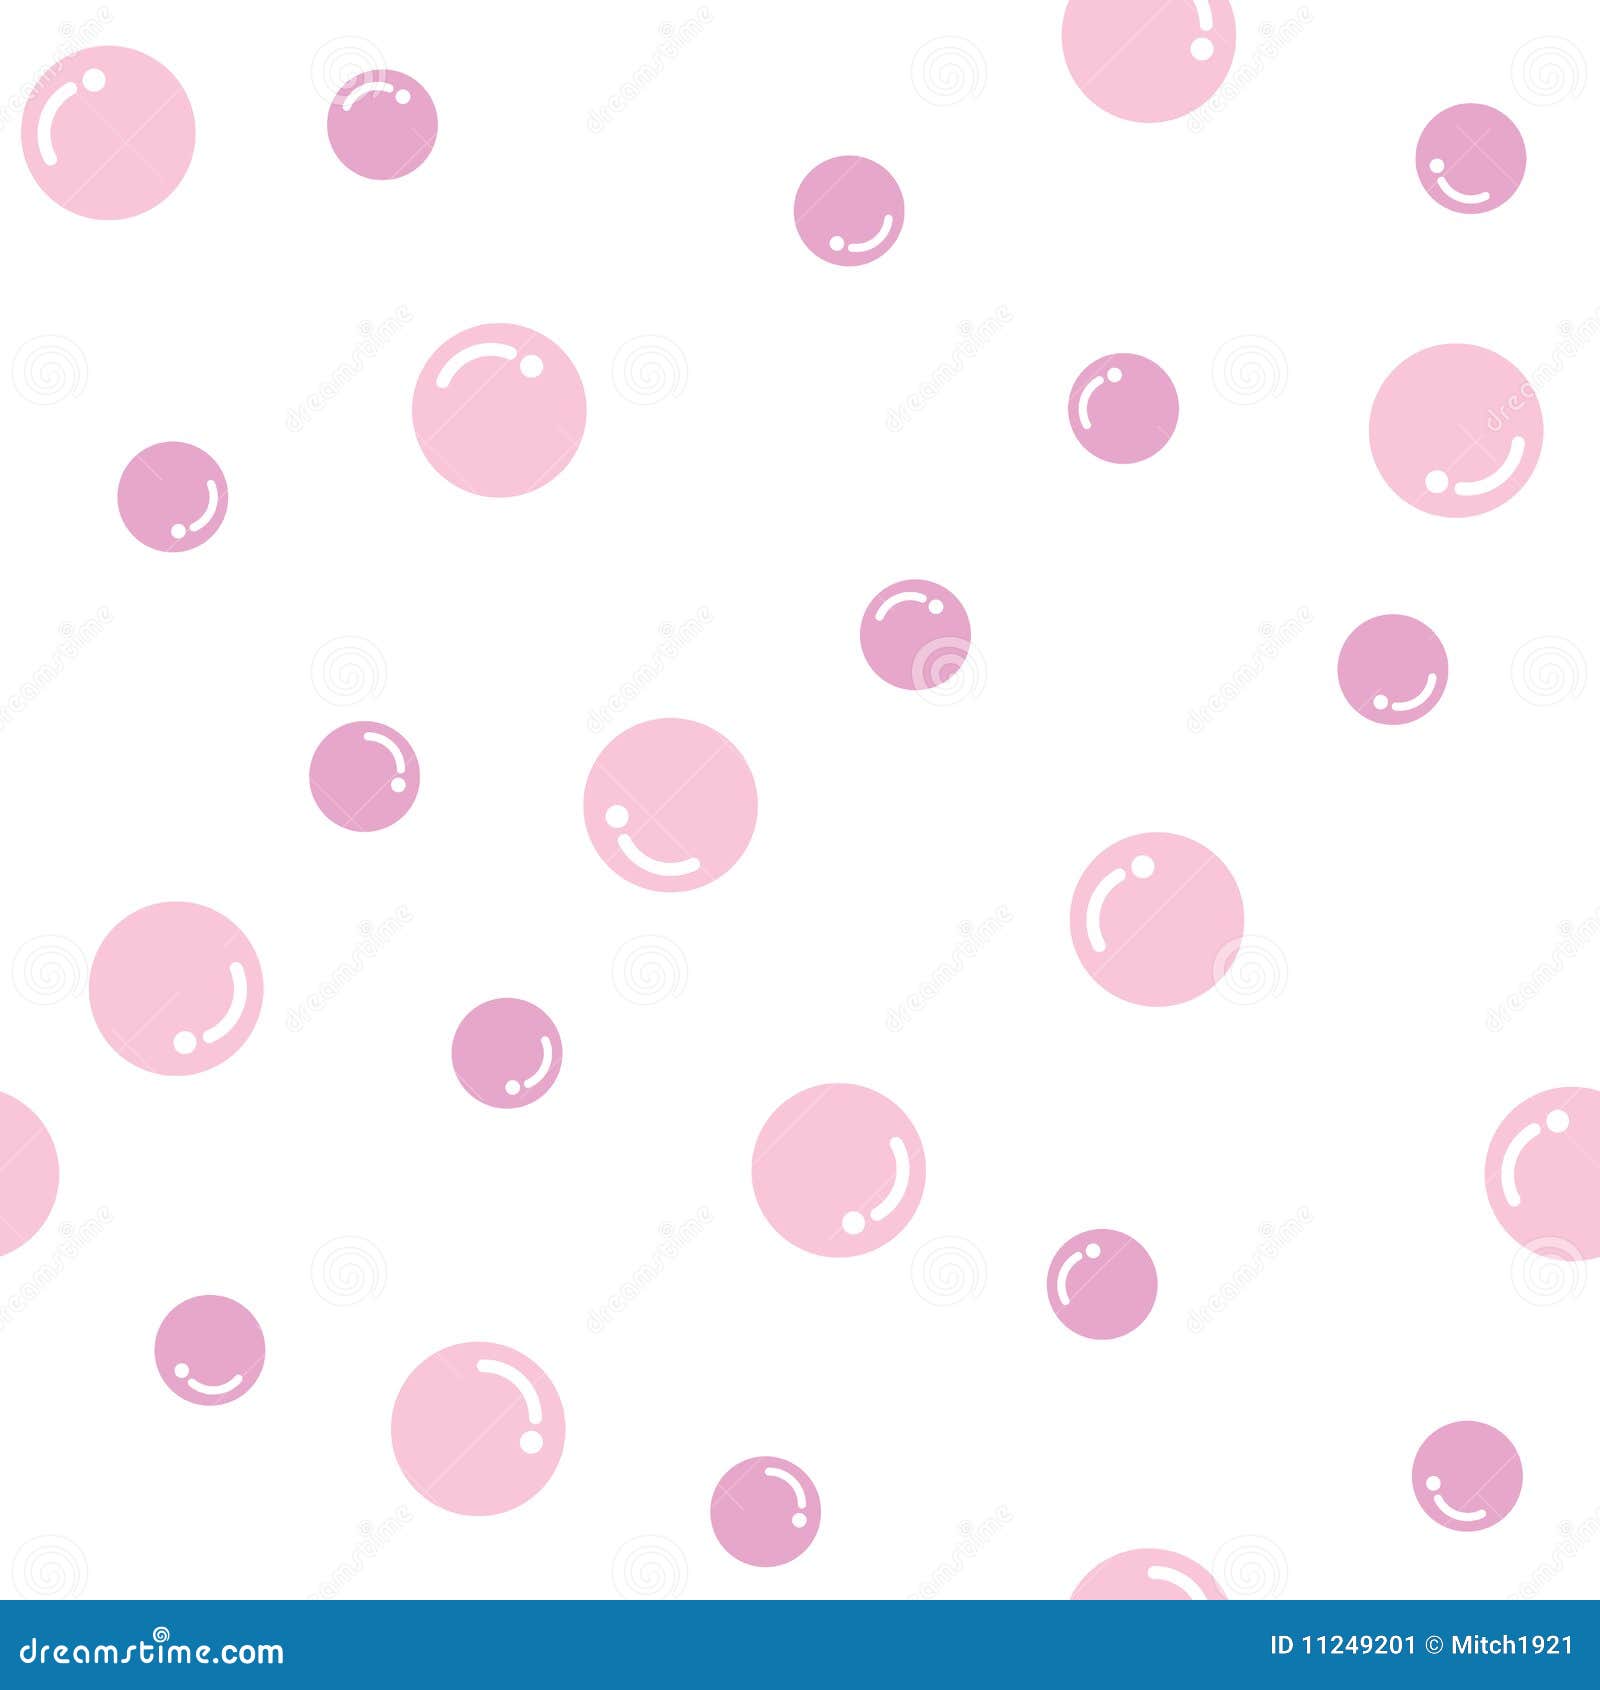 Pink Bubbles Illustration 11249201 - Megapixl